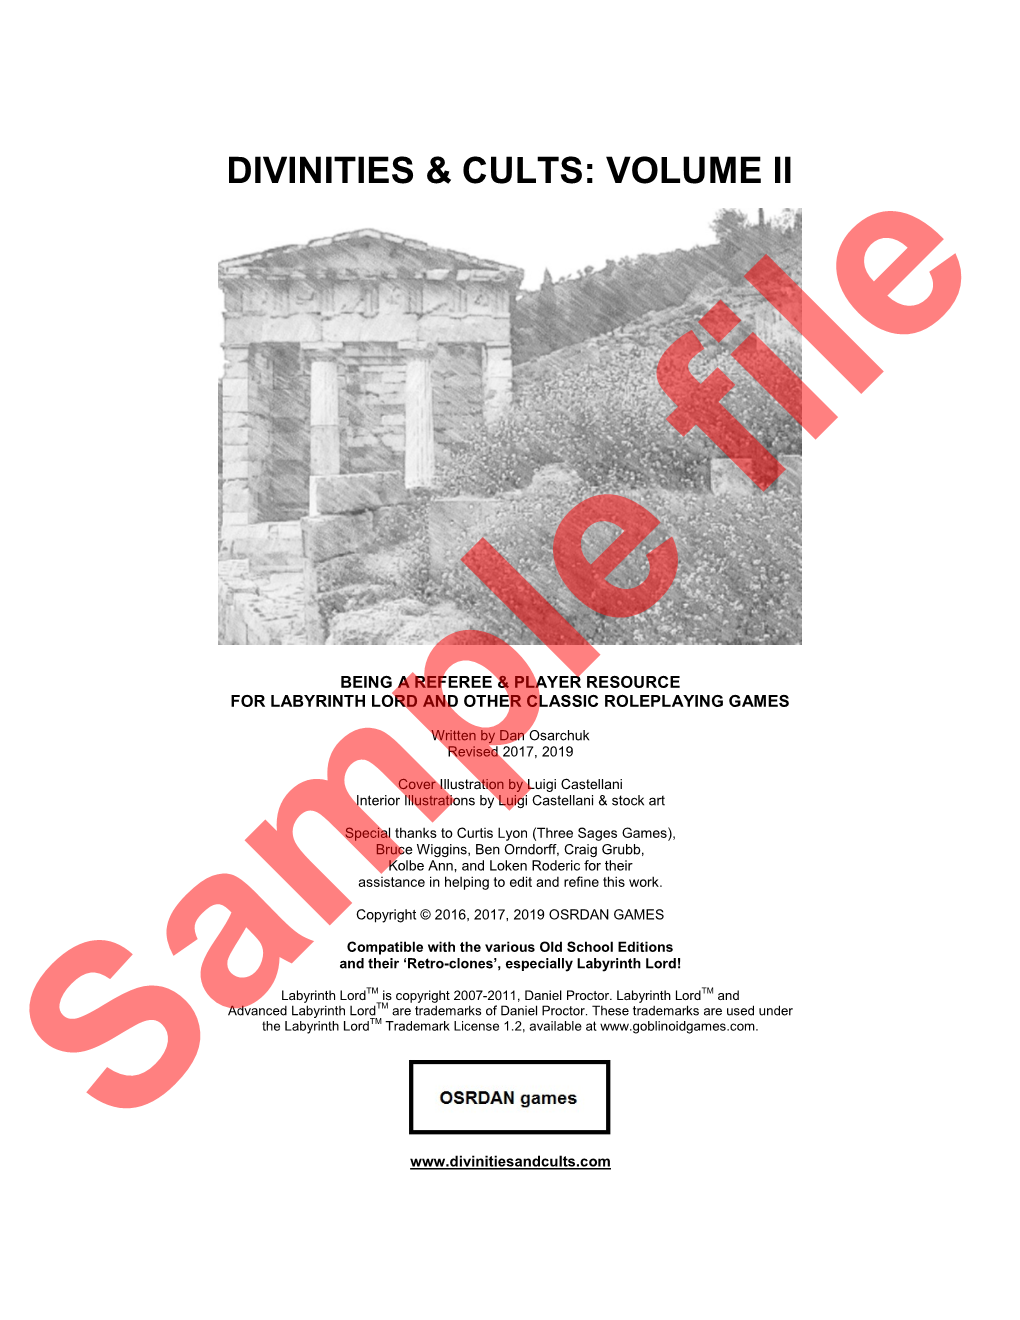 Divinities & Cults